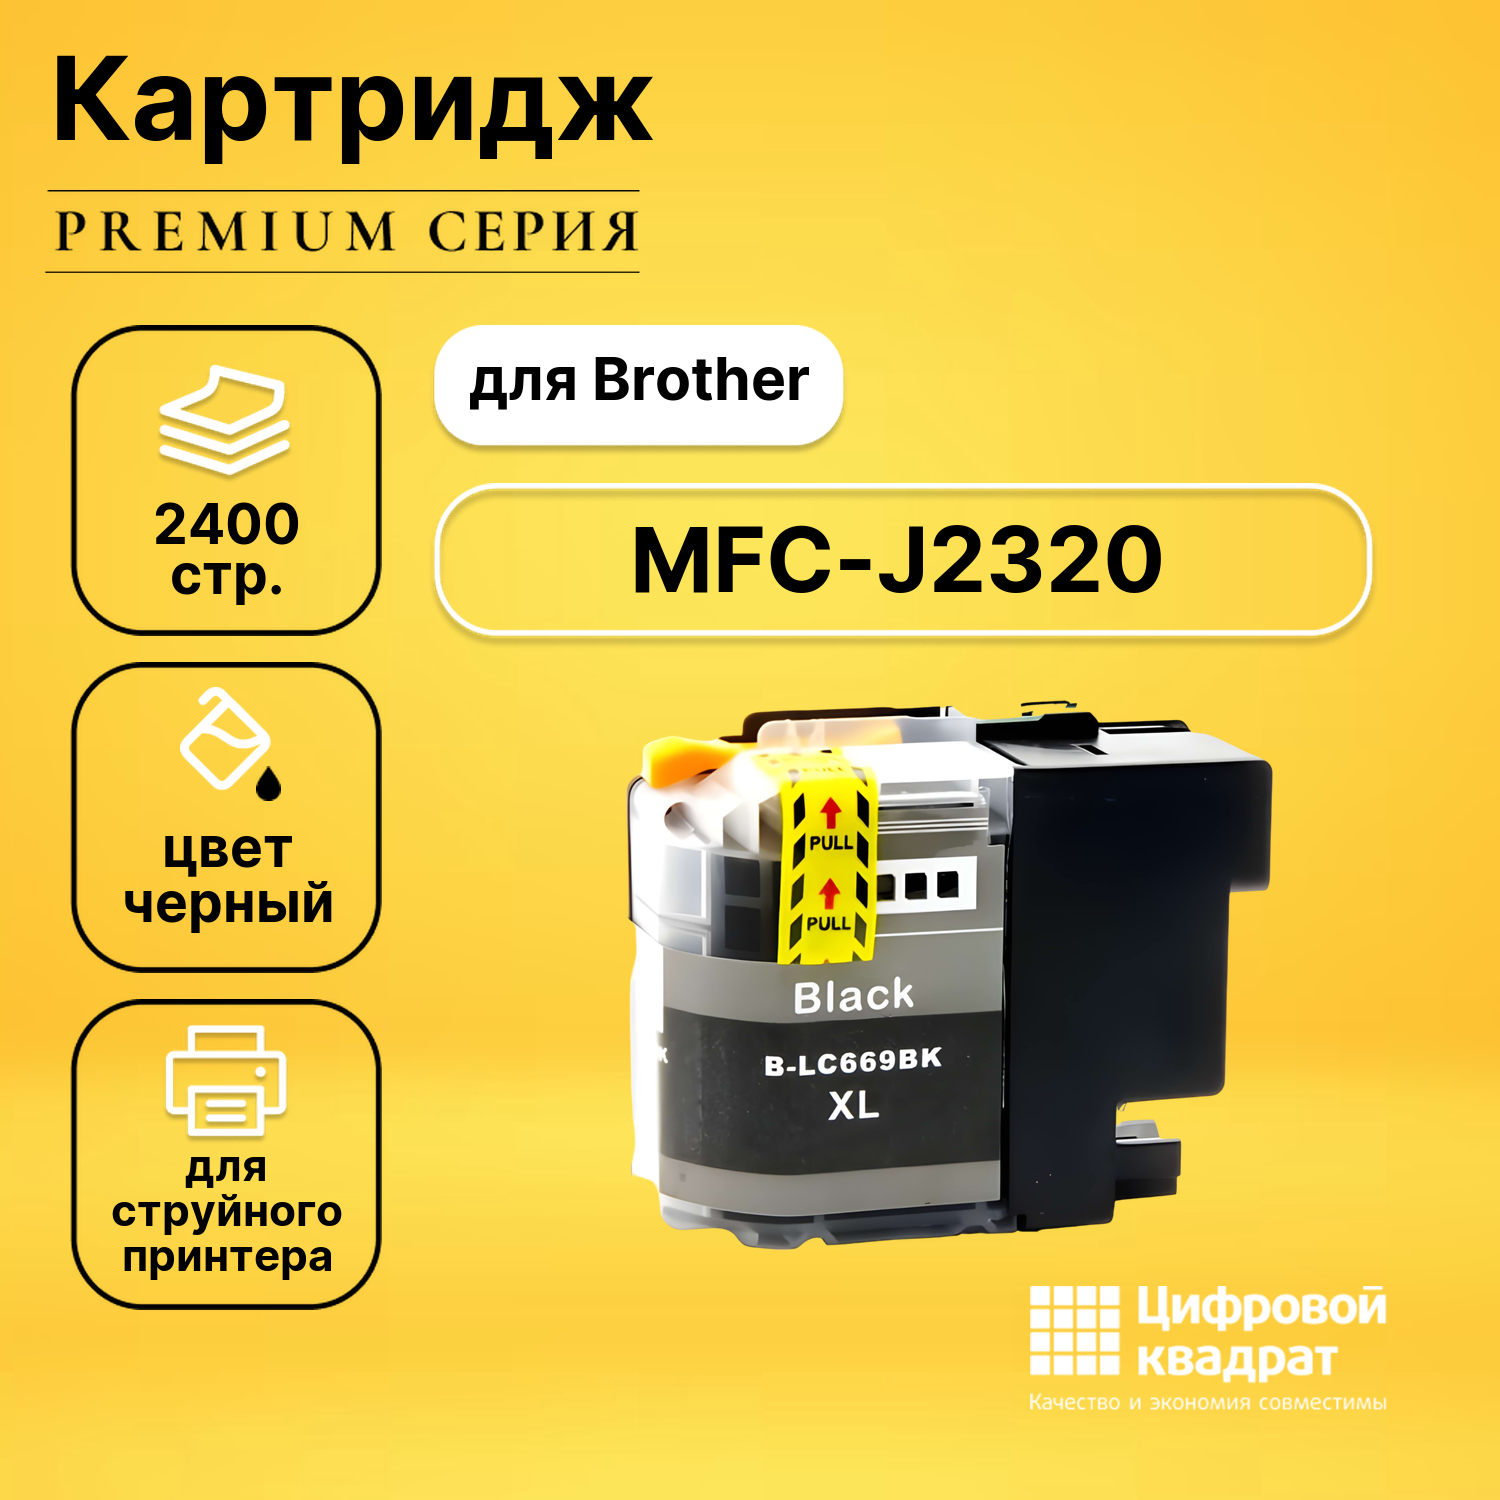 Картридж DS для Brother MFC-J2320 совместимый